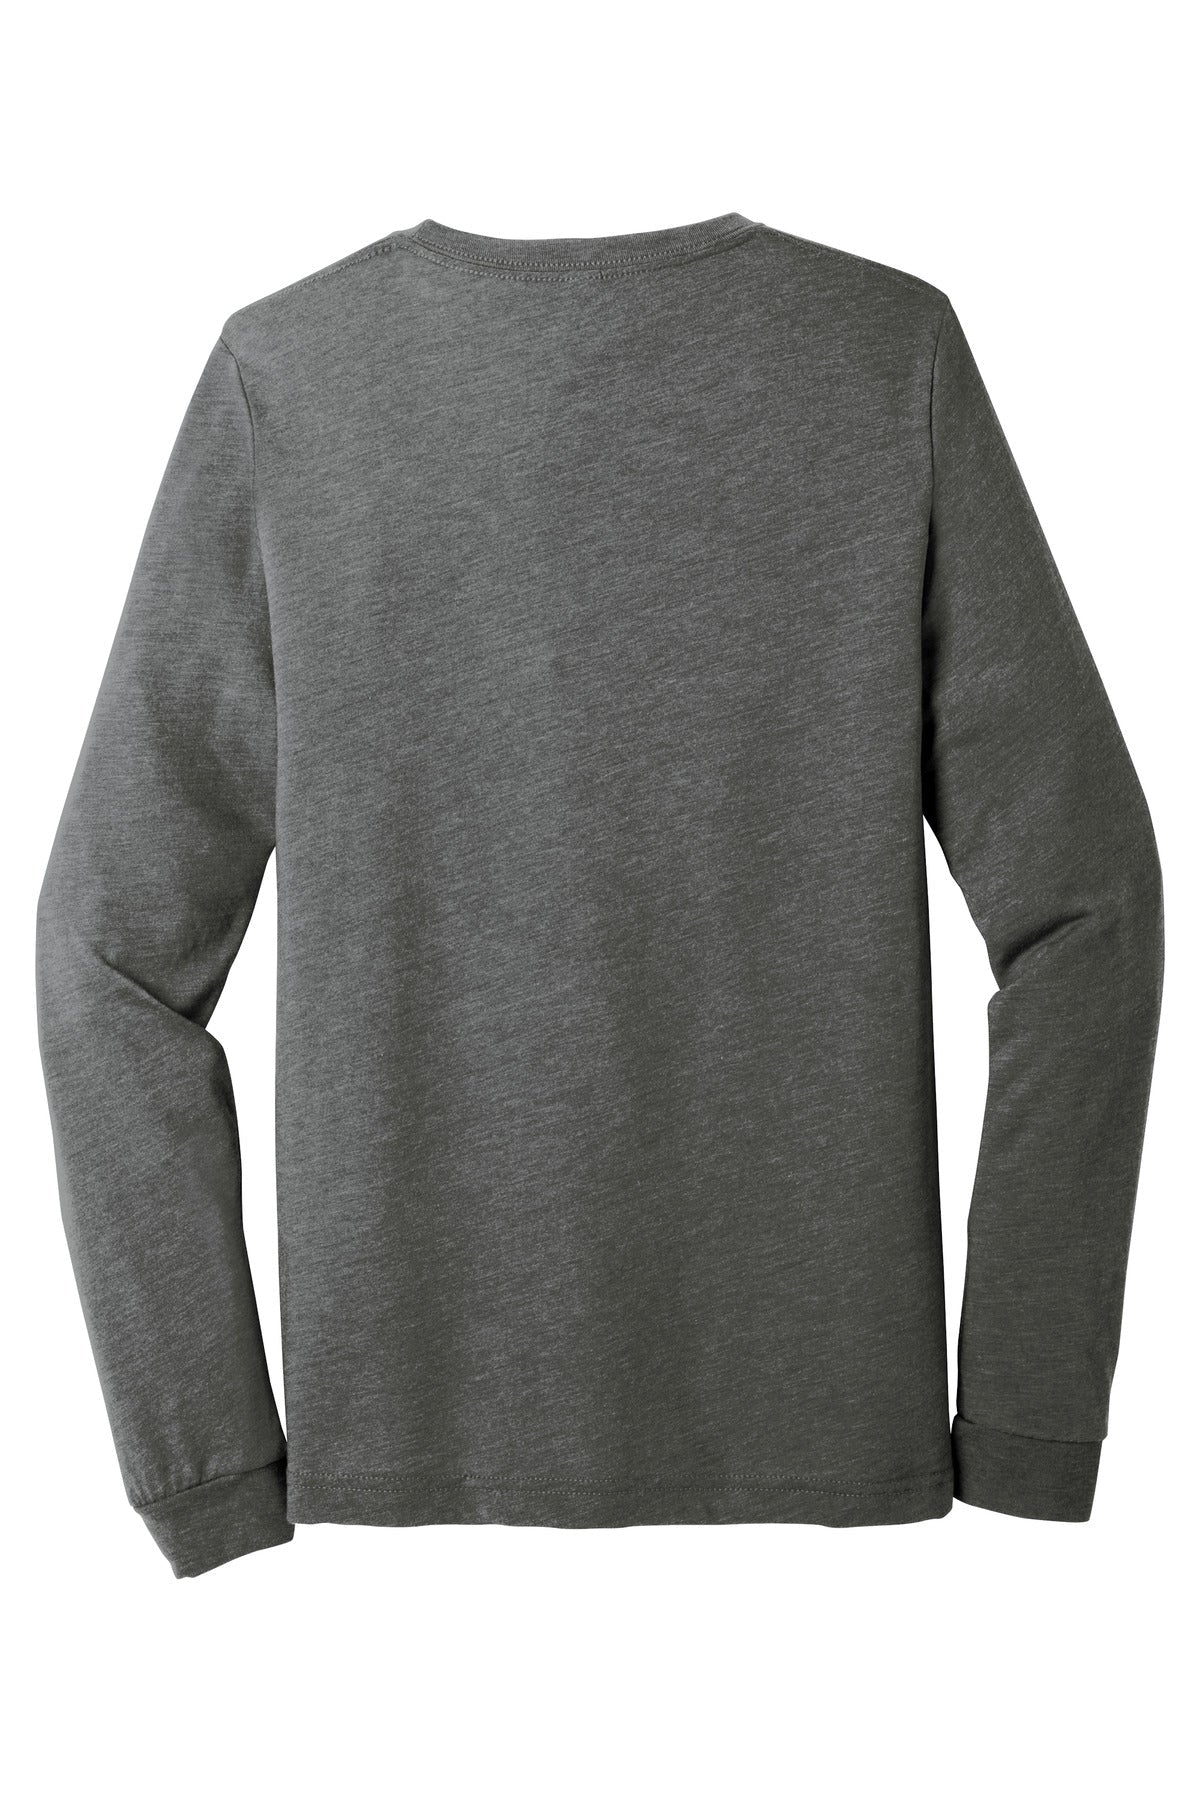 BELLA+CANVAS Unisex Triblend Long Sleeve Tee BC3513 - BT Imprintables Shirts